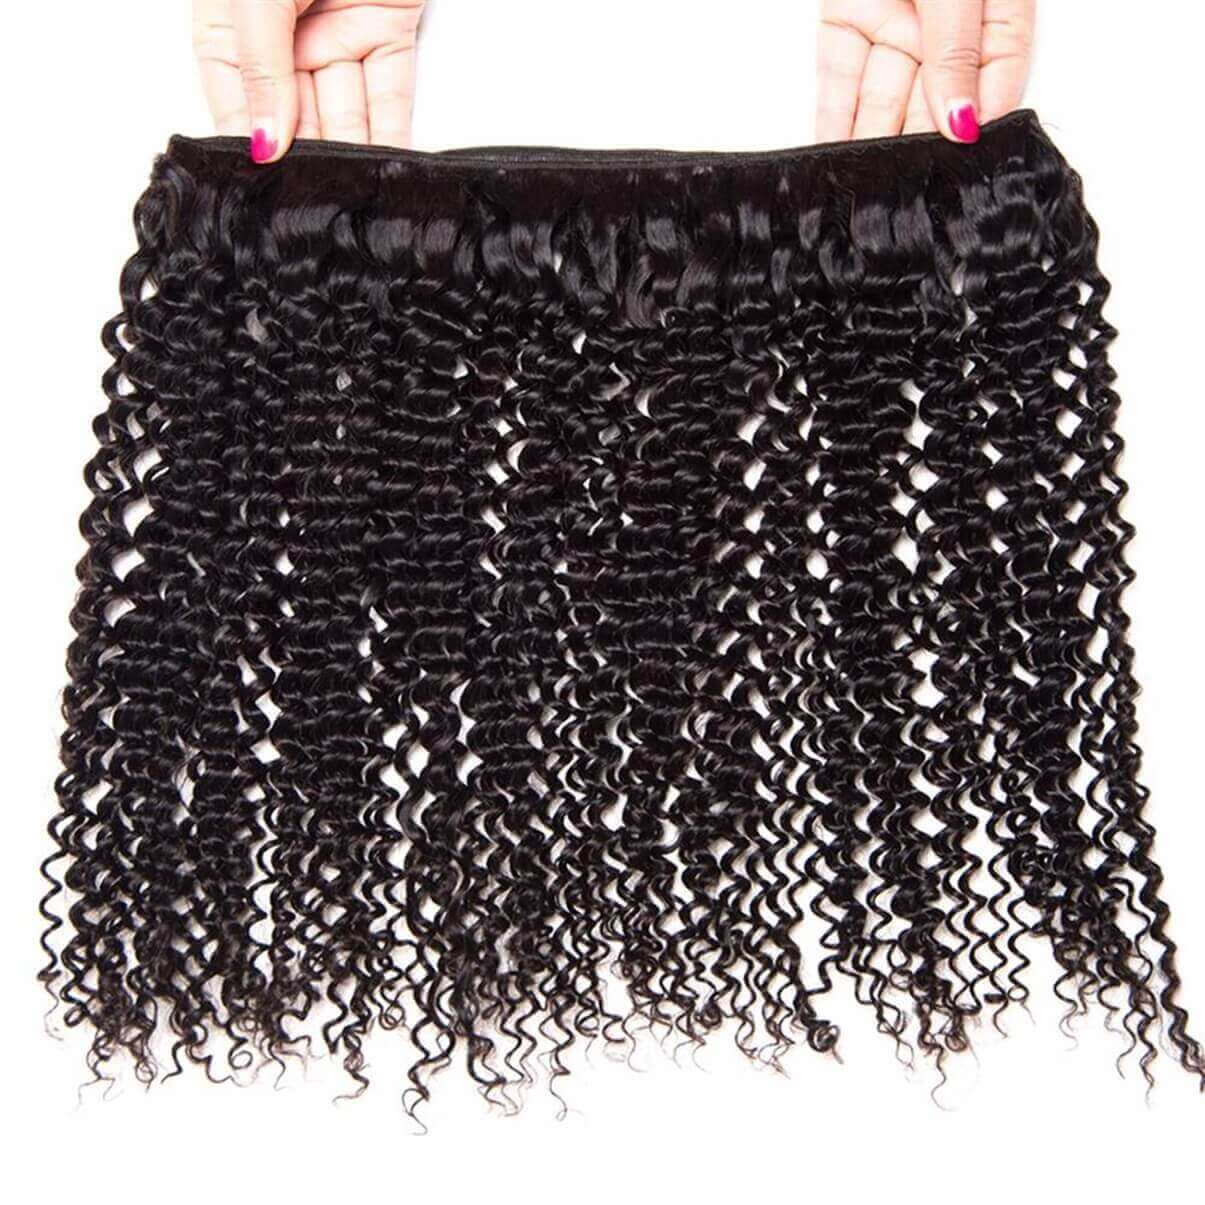 Lakihair 8A Kinky Curly 3 Bundles With Frontal Closure 13x4 Brazilian Virgin Human Hair Bundles